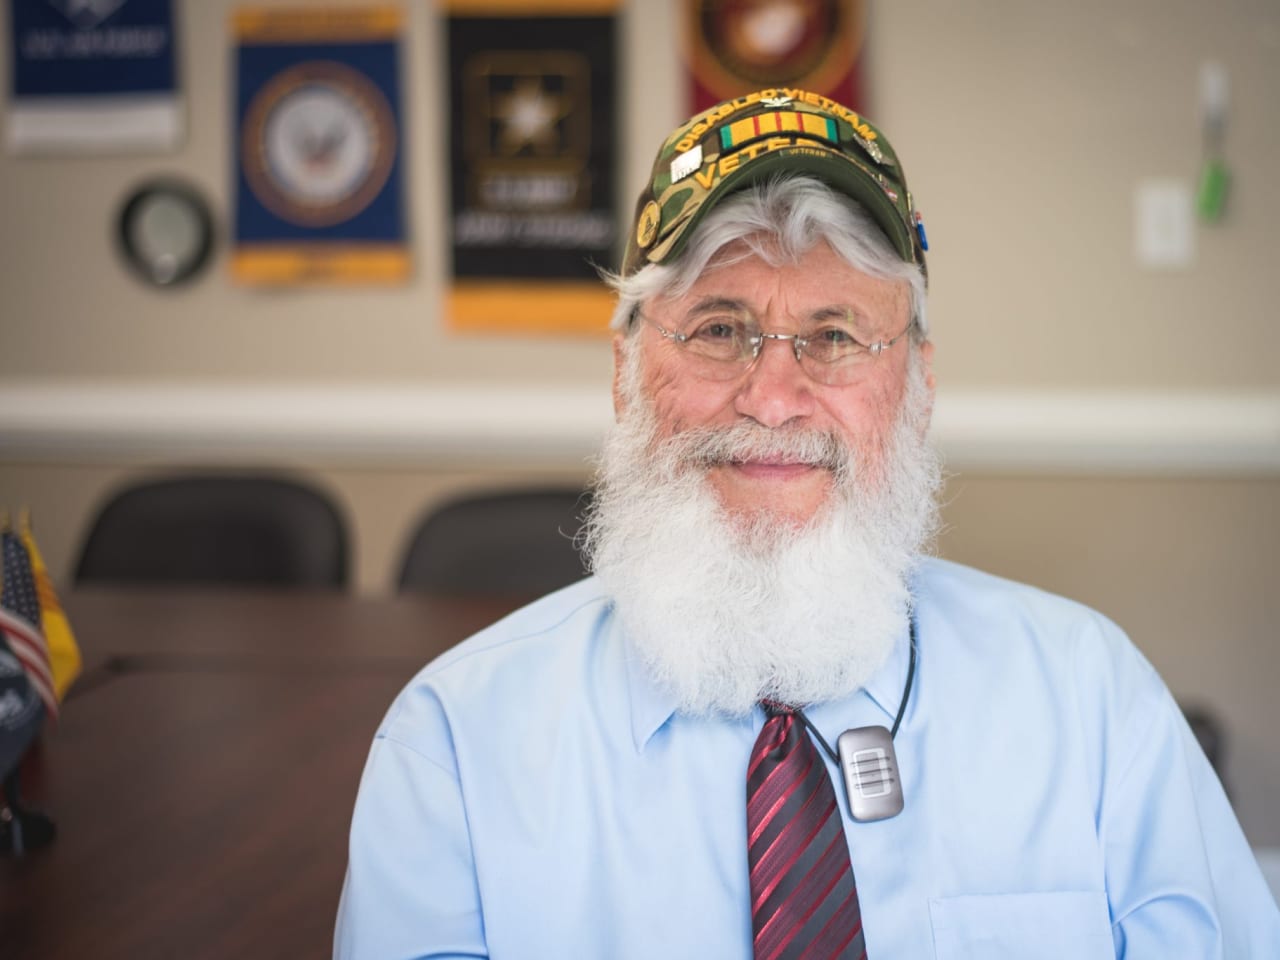 Portrait of an older male veteran smiling